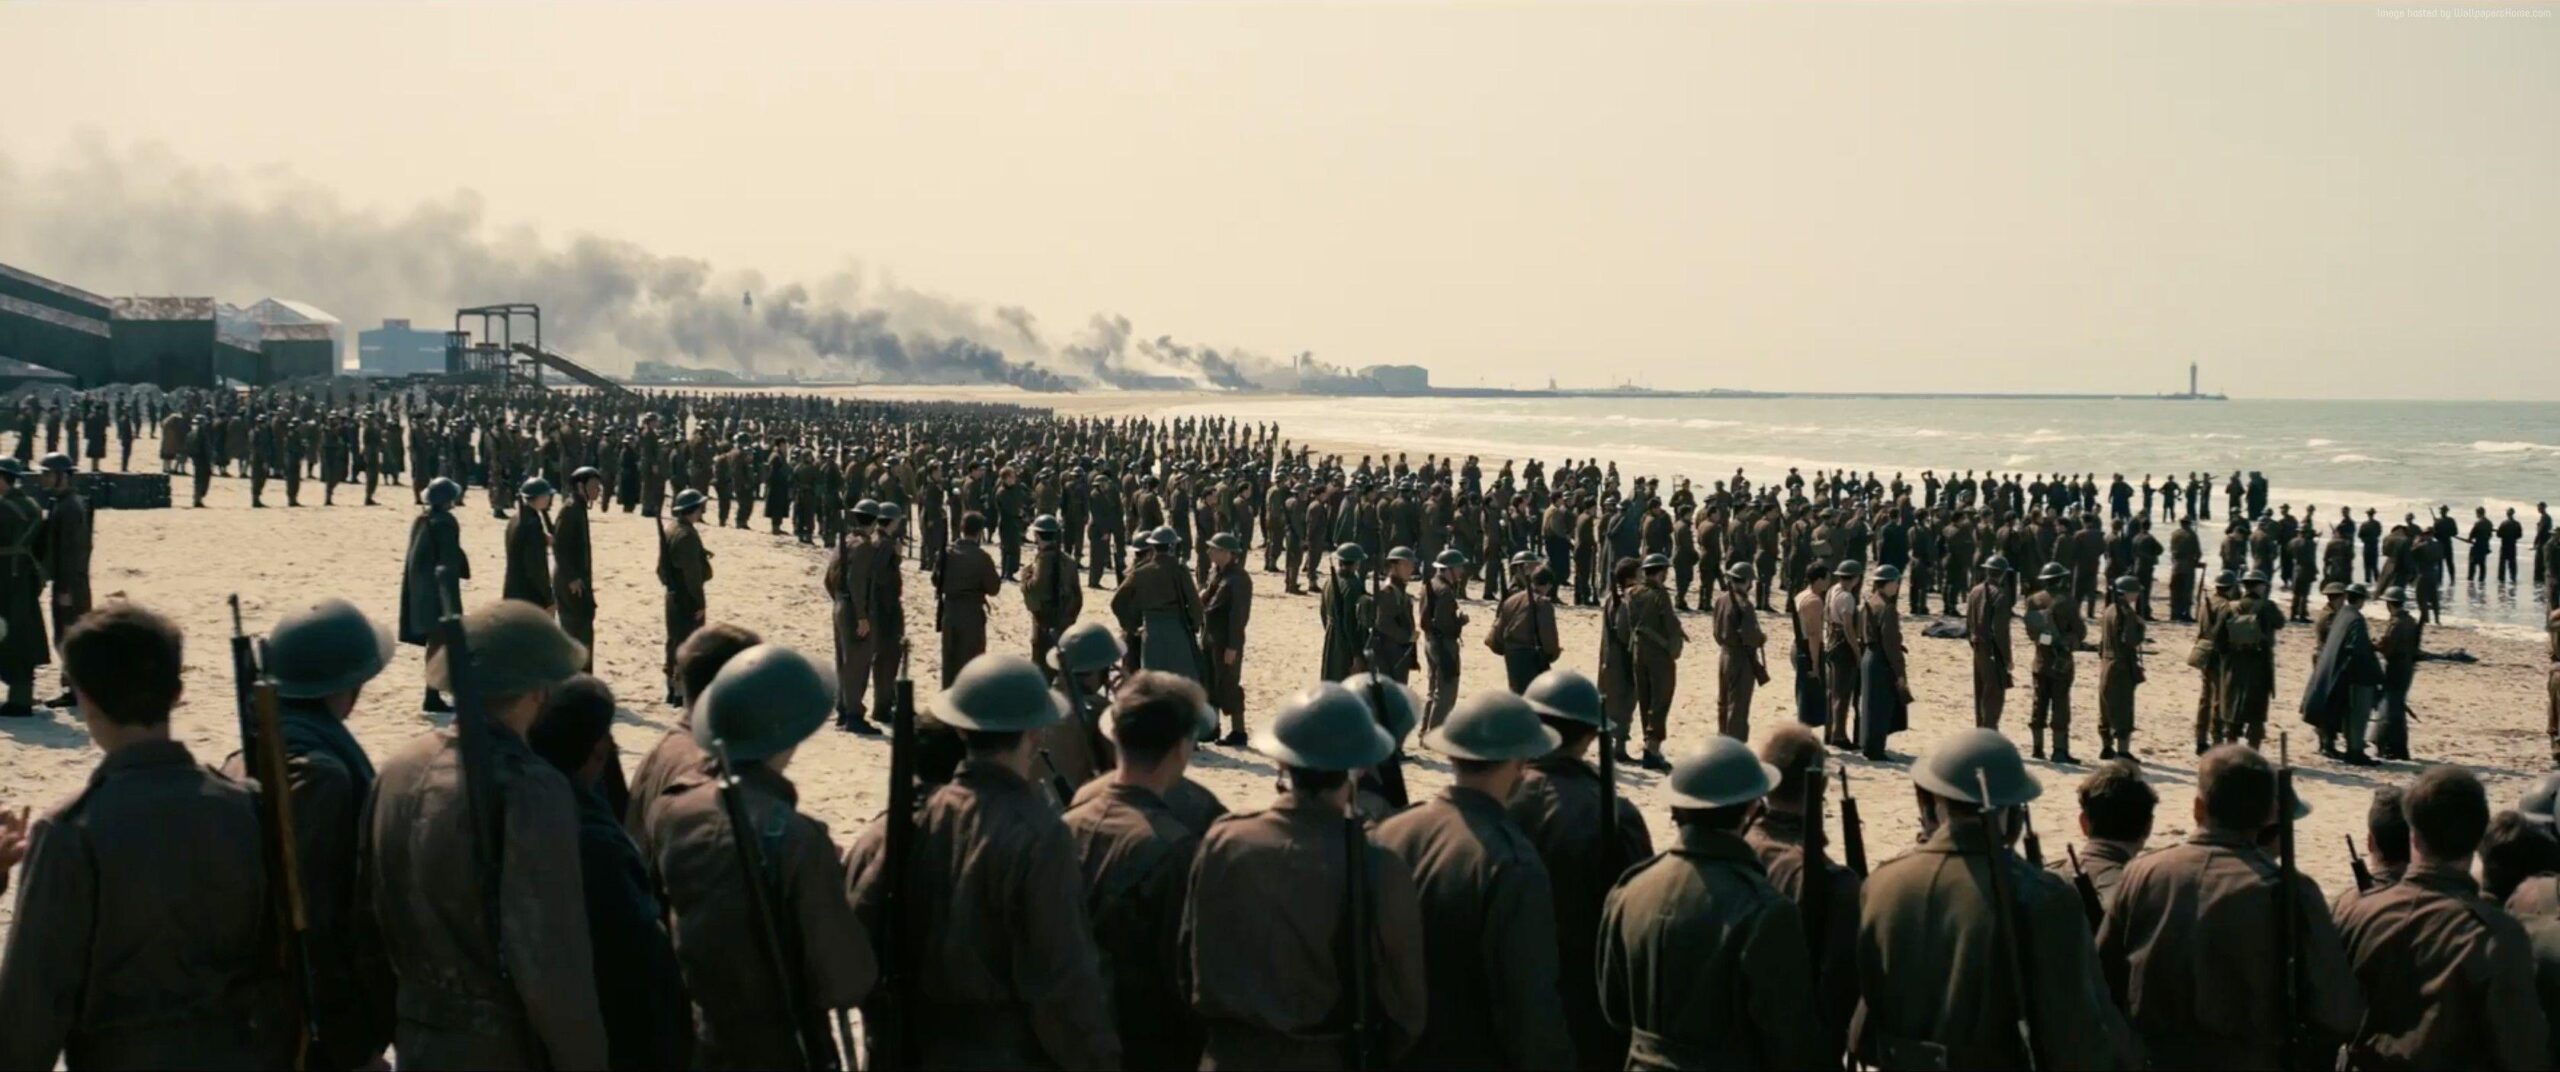 Dunkirk 2017 film Wallpapers